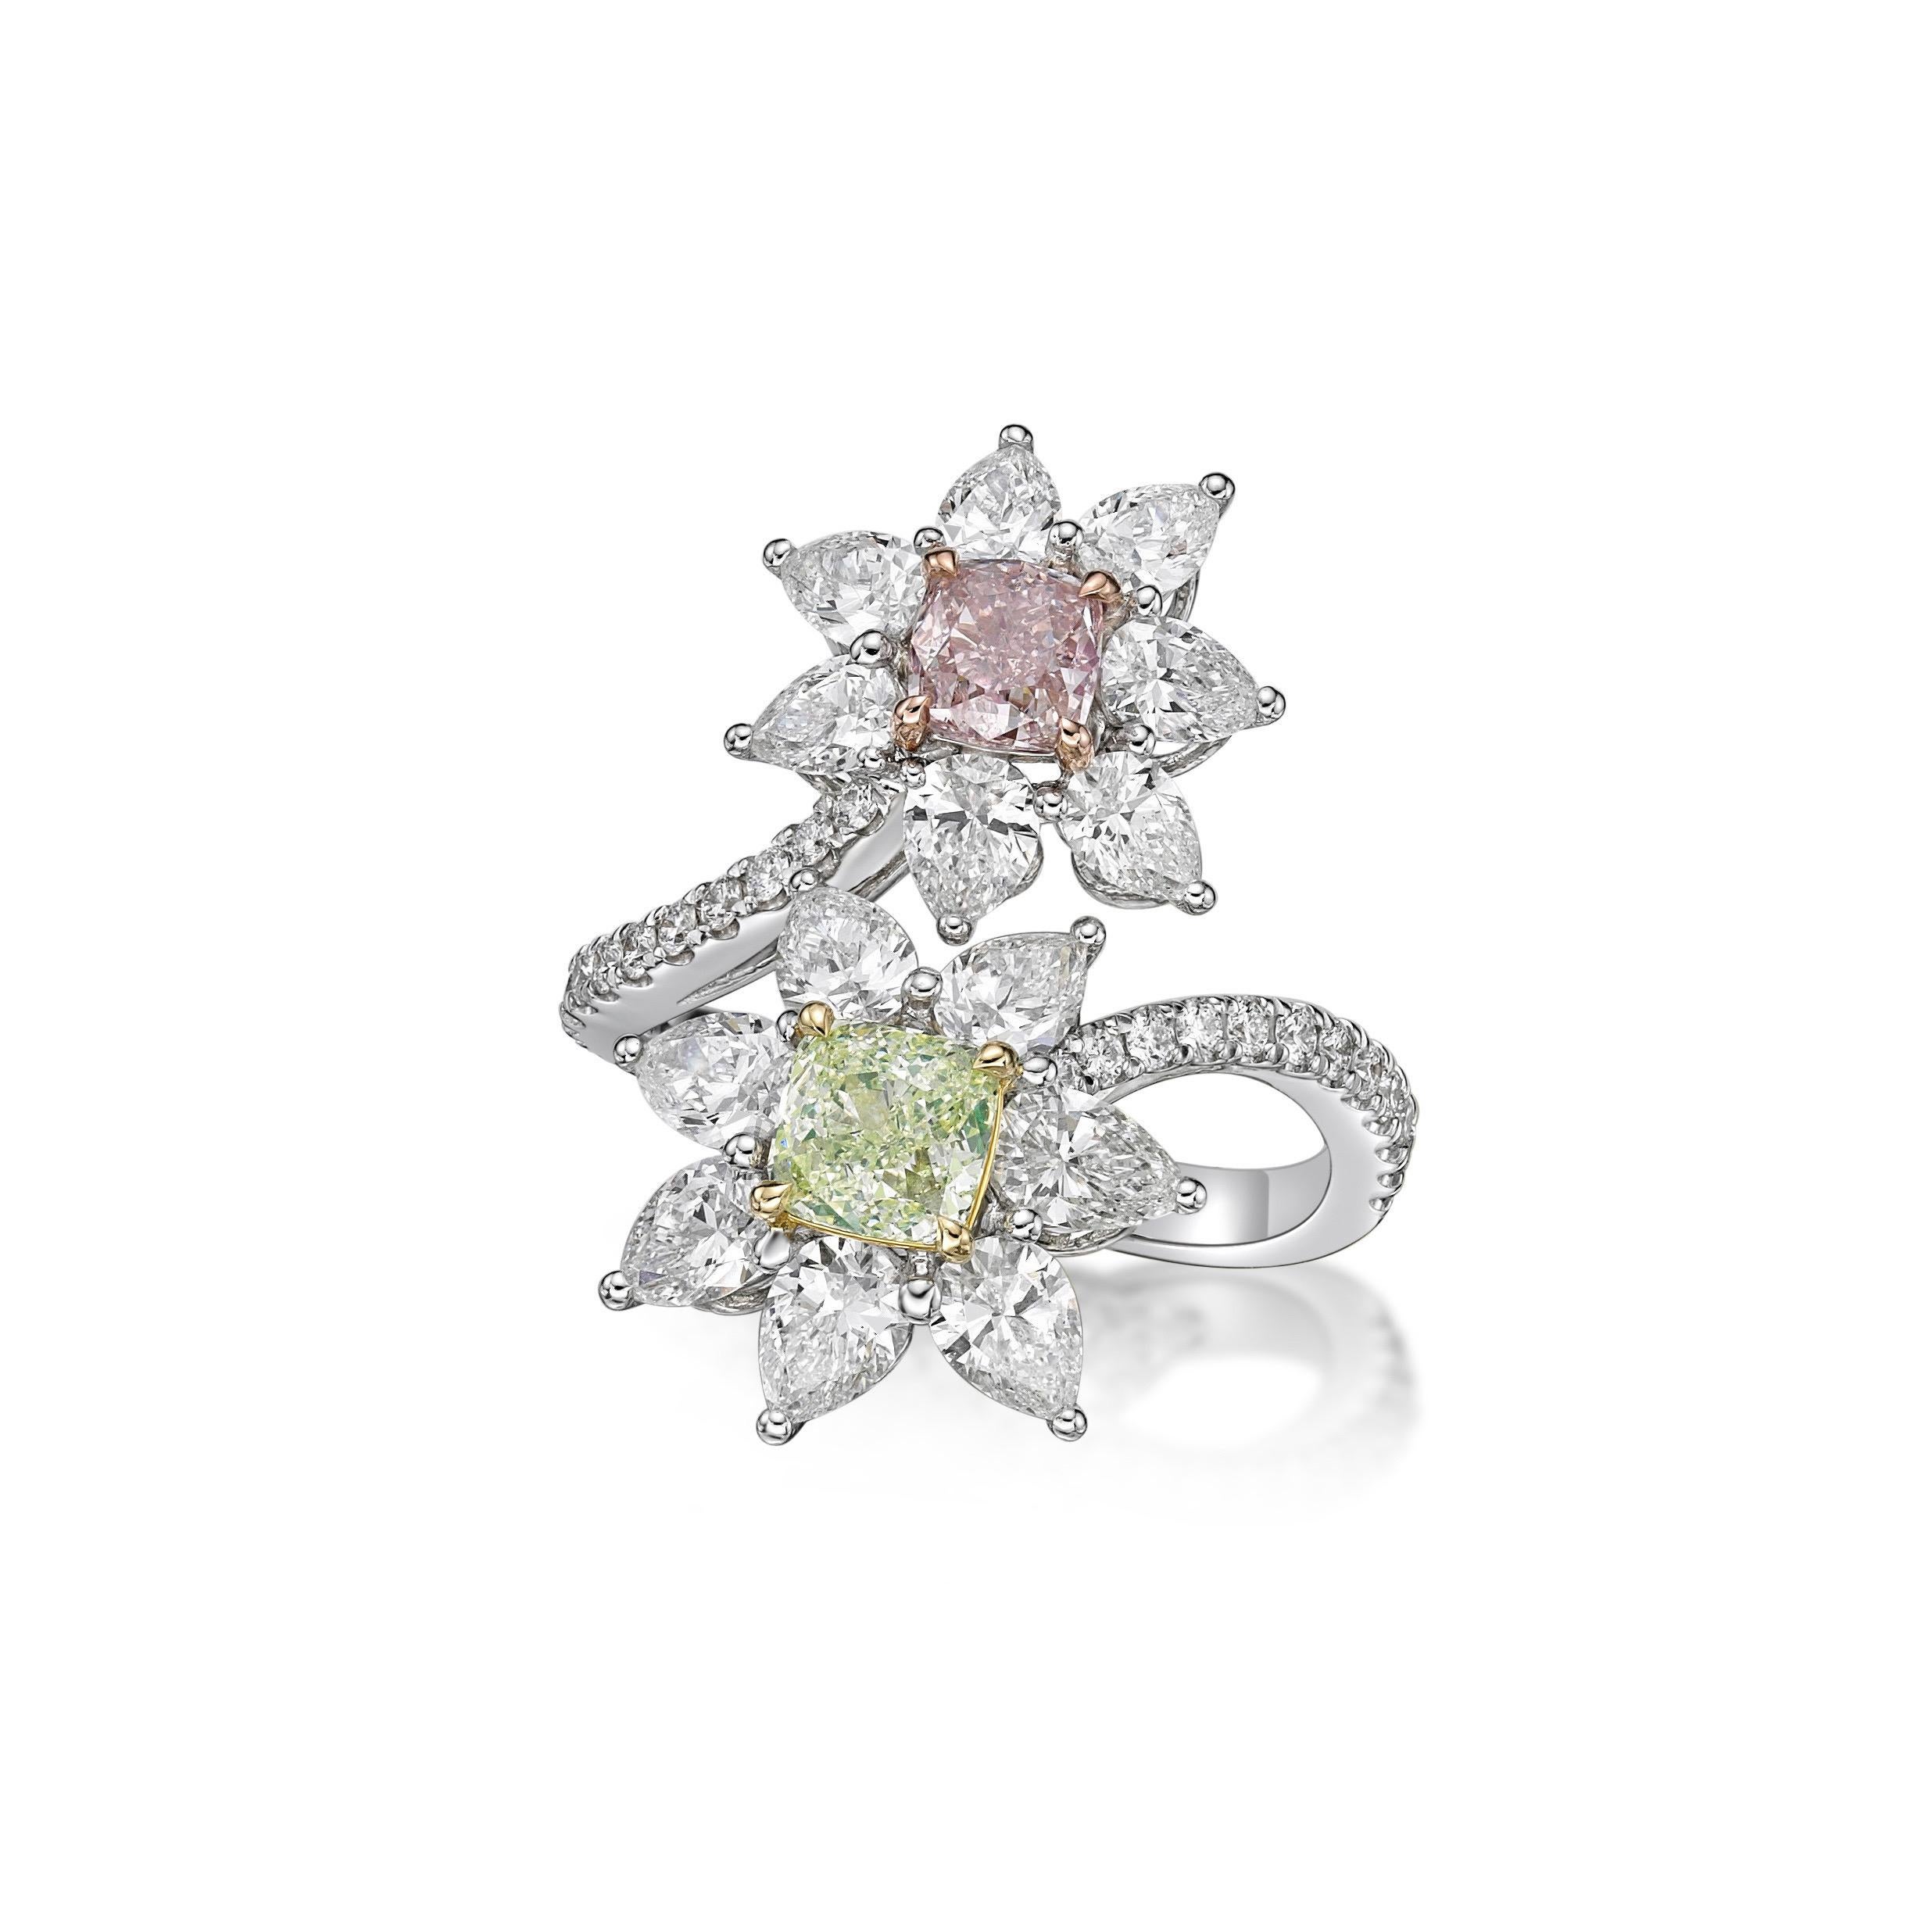 Cushion Cut Emilio Jewelry Gia Certified Fancy Green Pink 4.10 Carat Diamond Ring For Sale